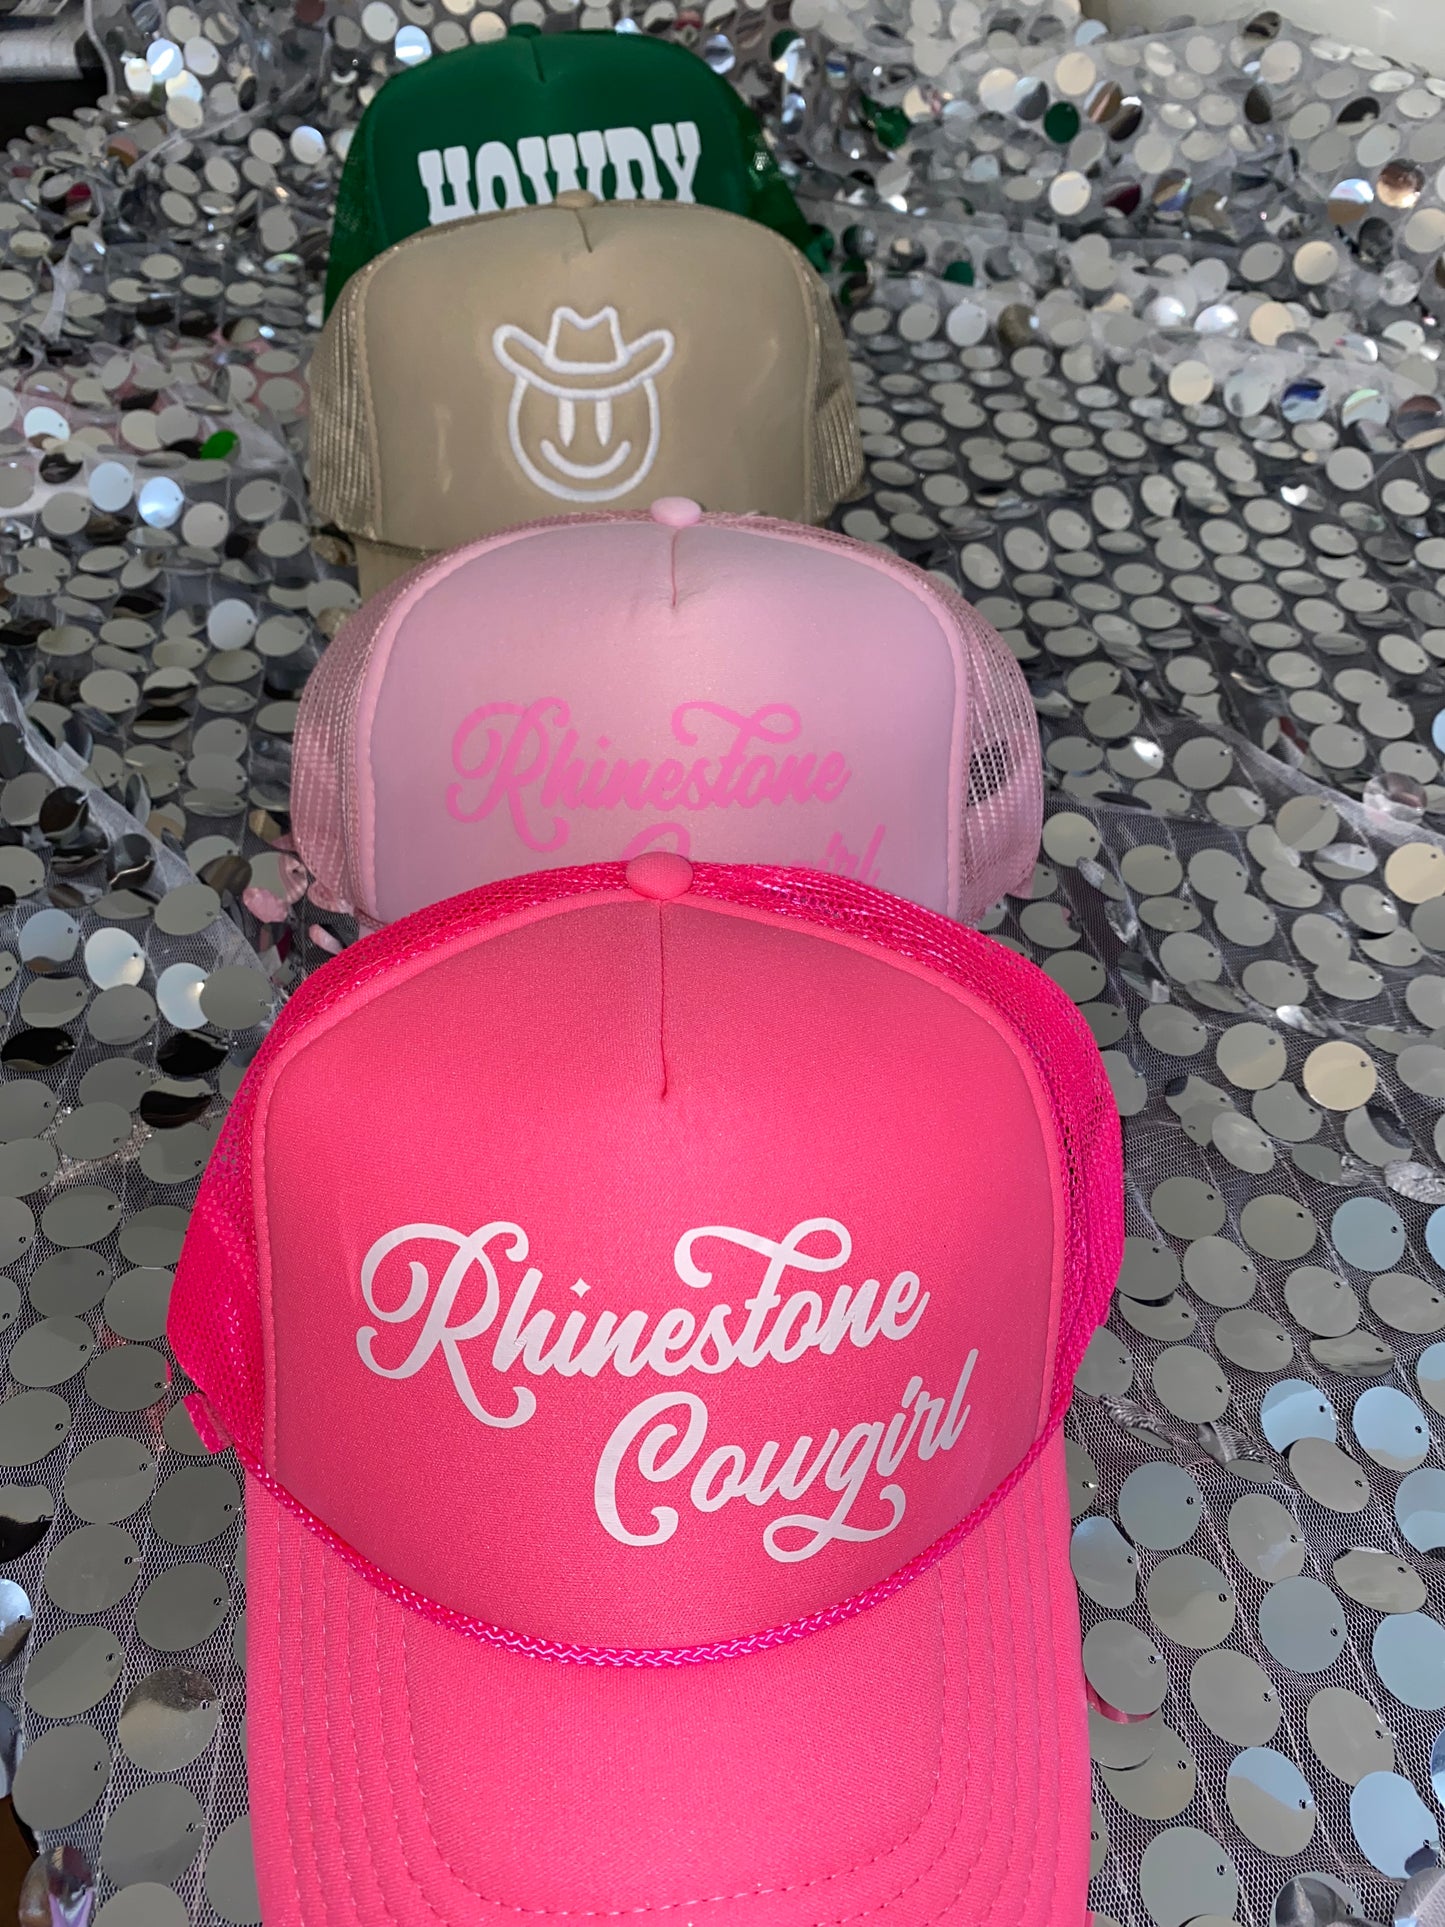 Hot Pink Rhinestone Cowgirl Trucker Hat